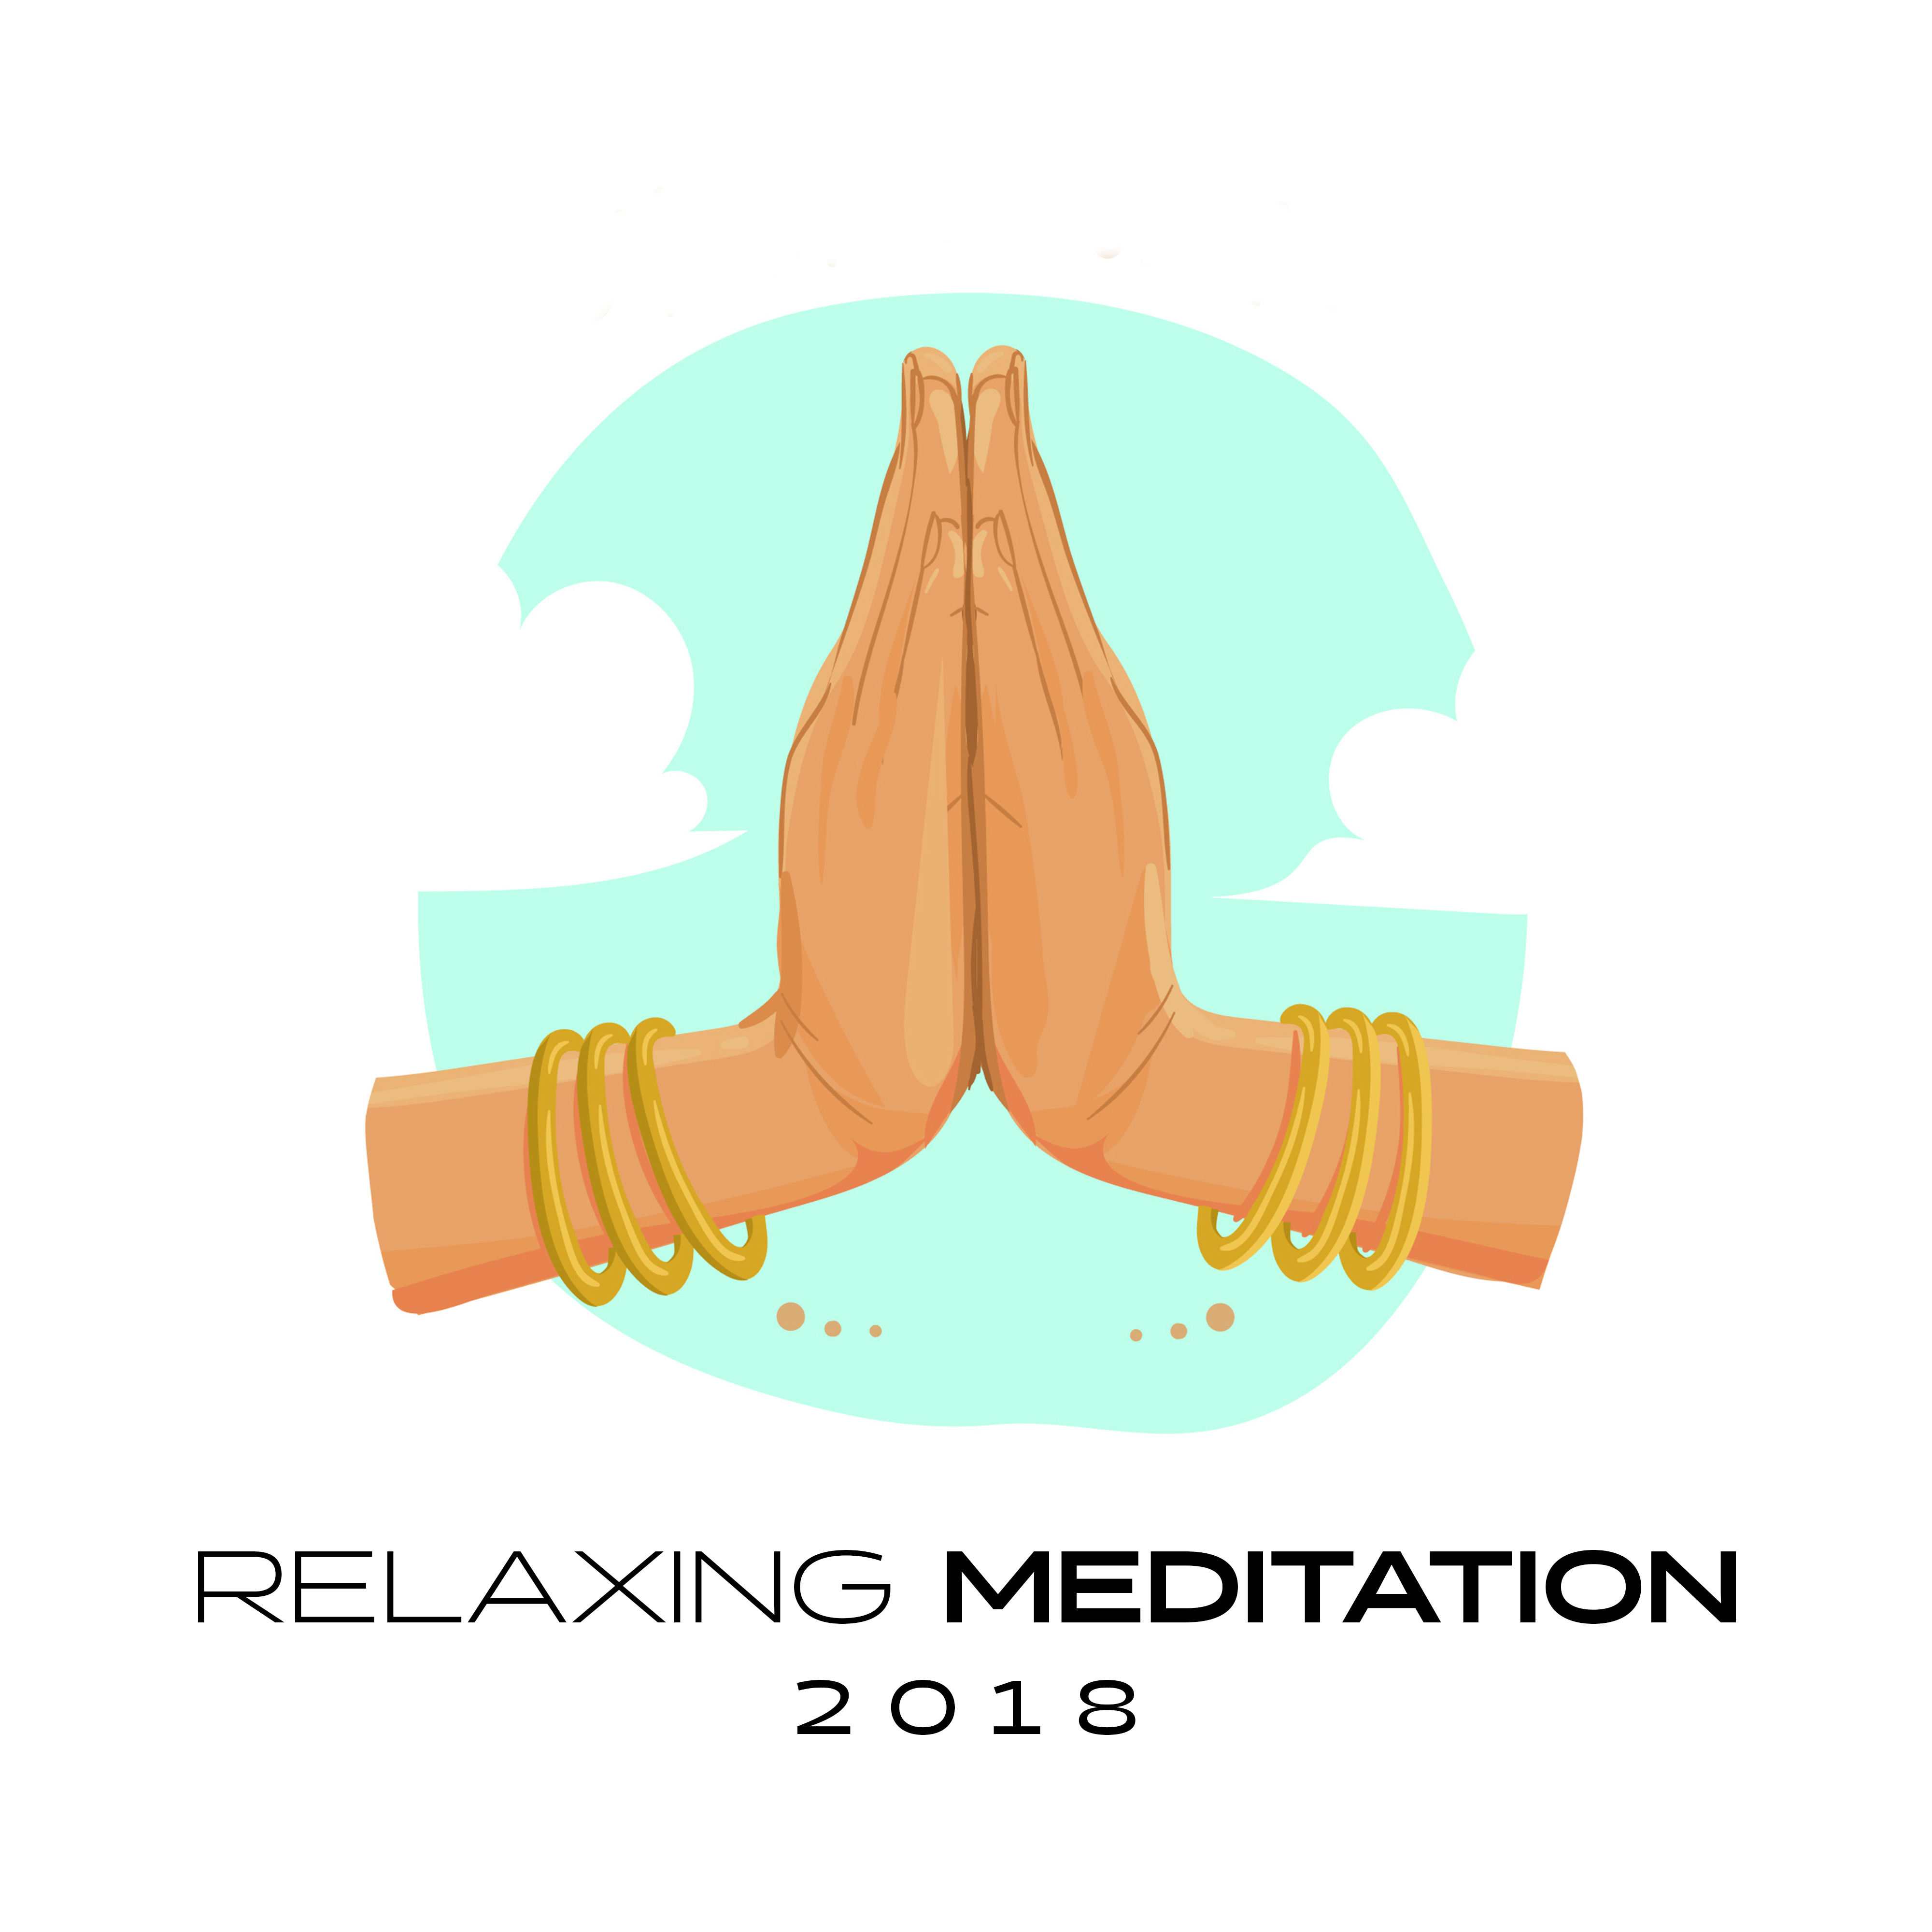 Relaxing Meditation 2018